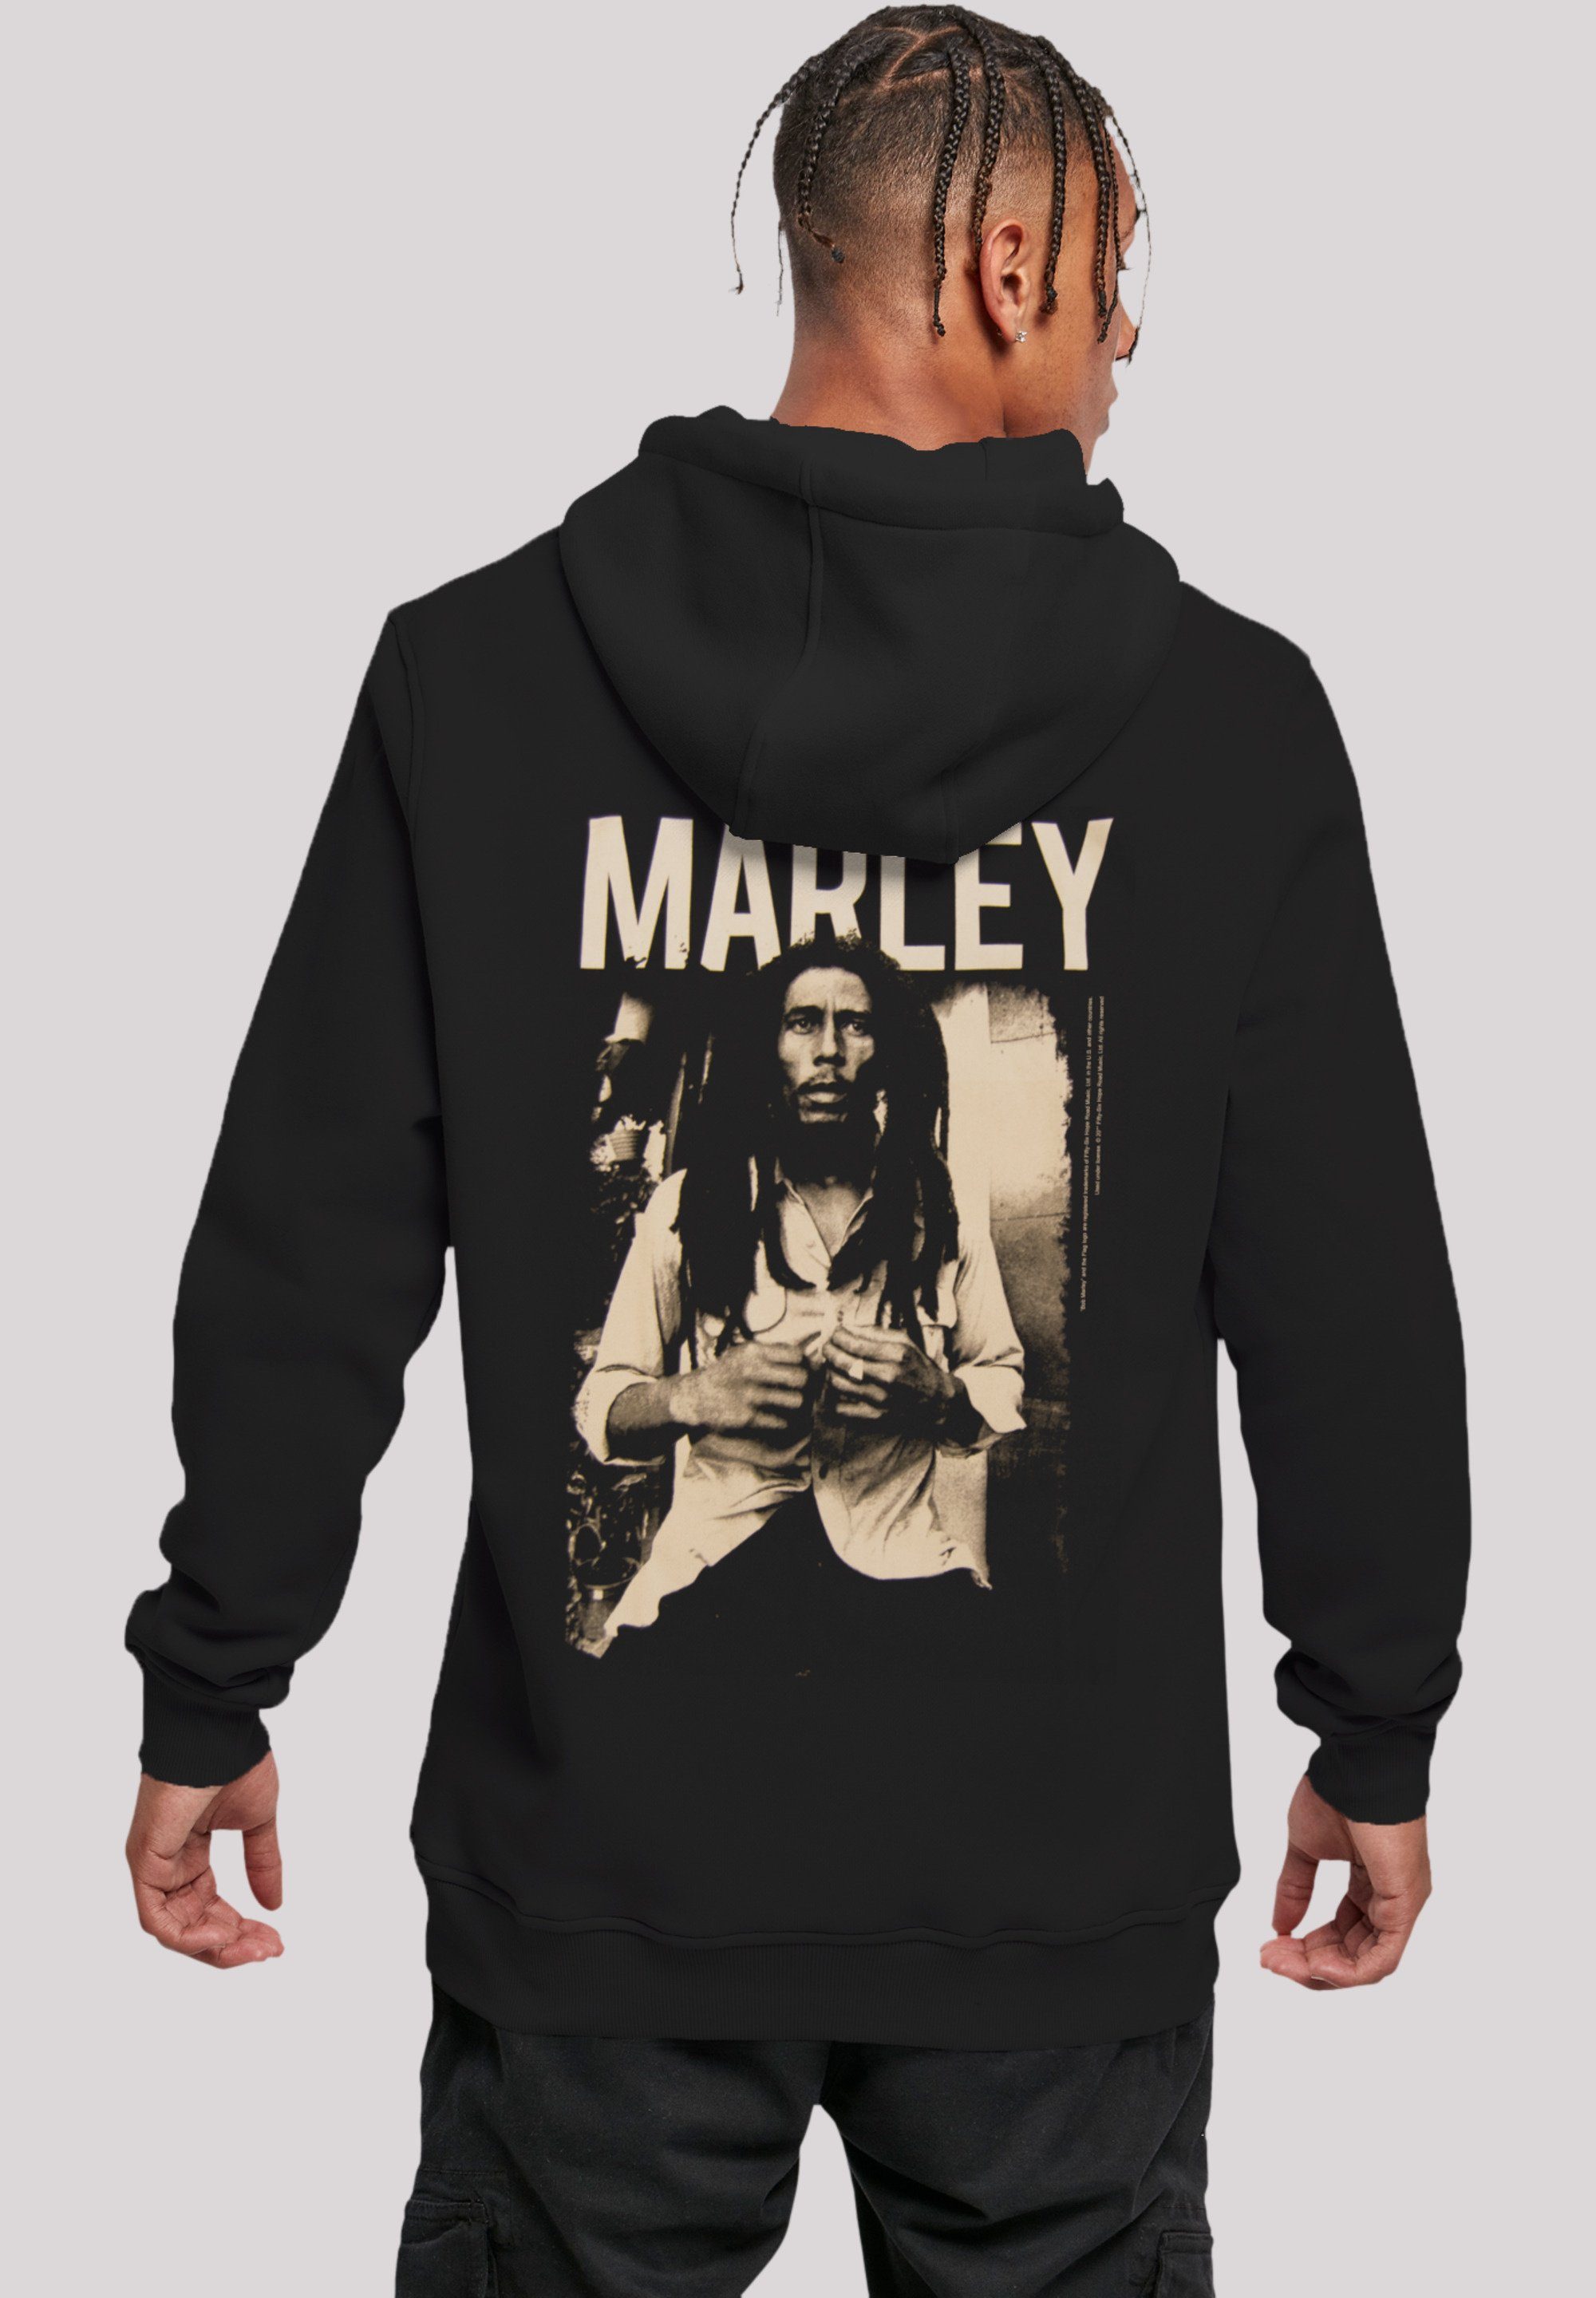 F4NT4STIC Hoodie Bob Marley Reggae Music Black And White Photograph Premium Qualität, Band, Logo